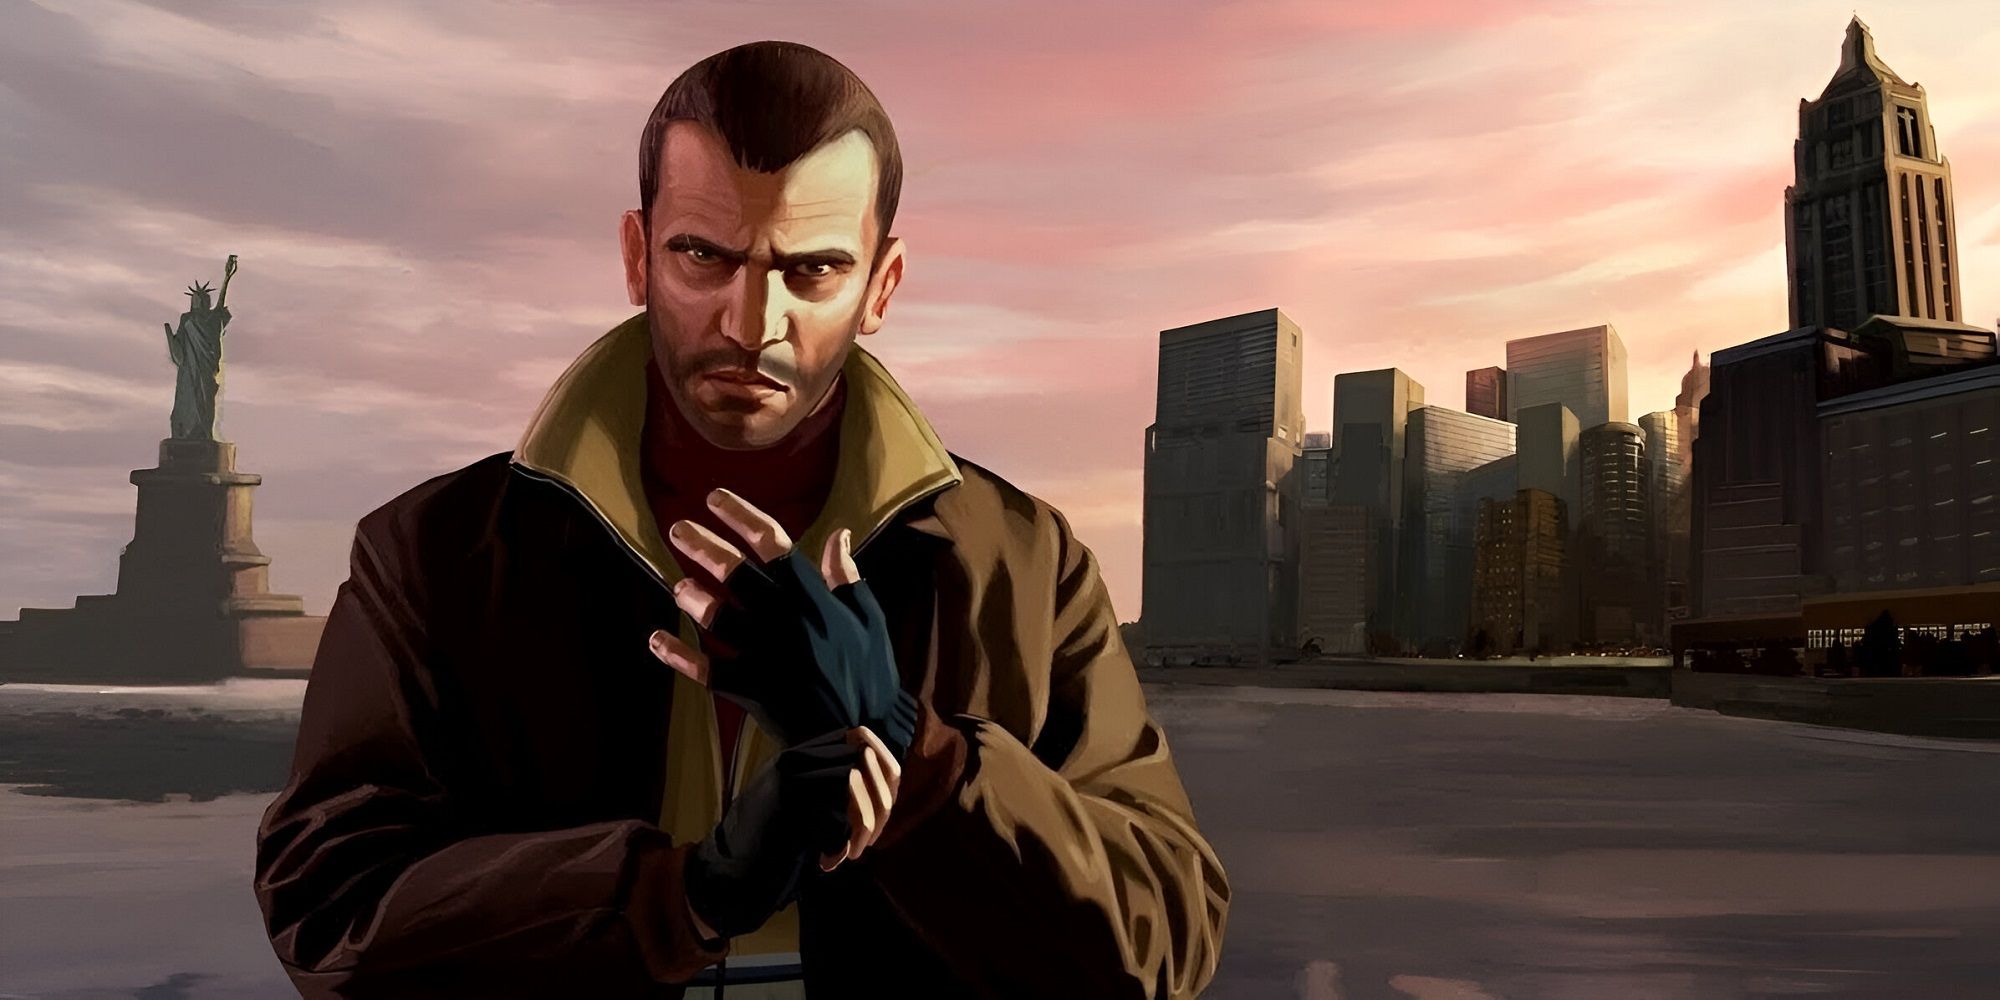 Grand Theft Auto IV's Niko Bellic.